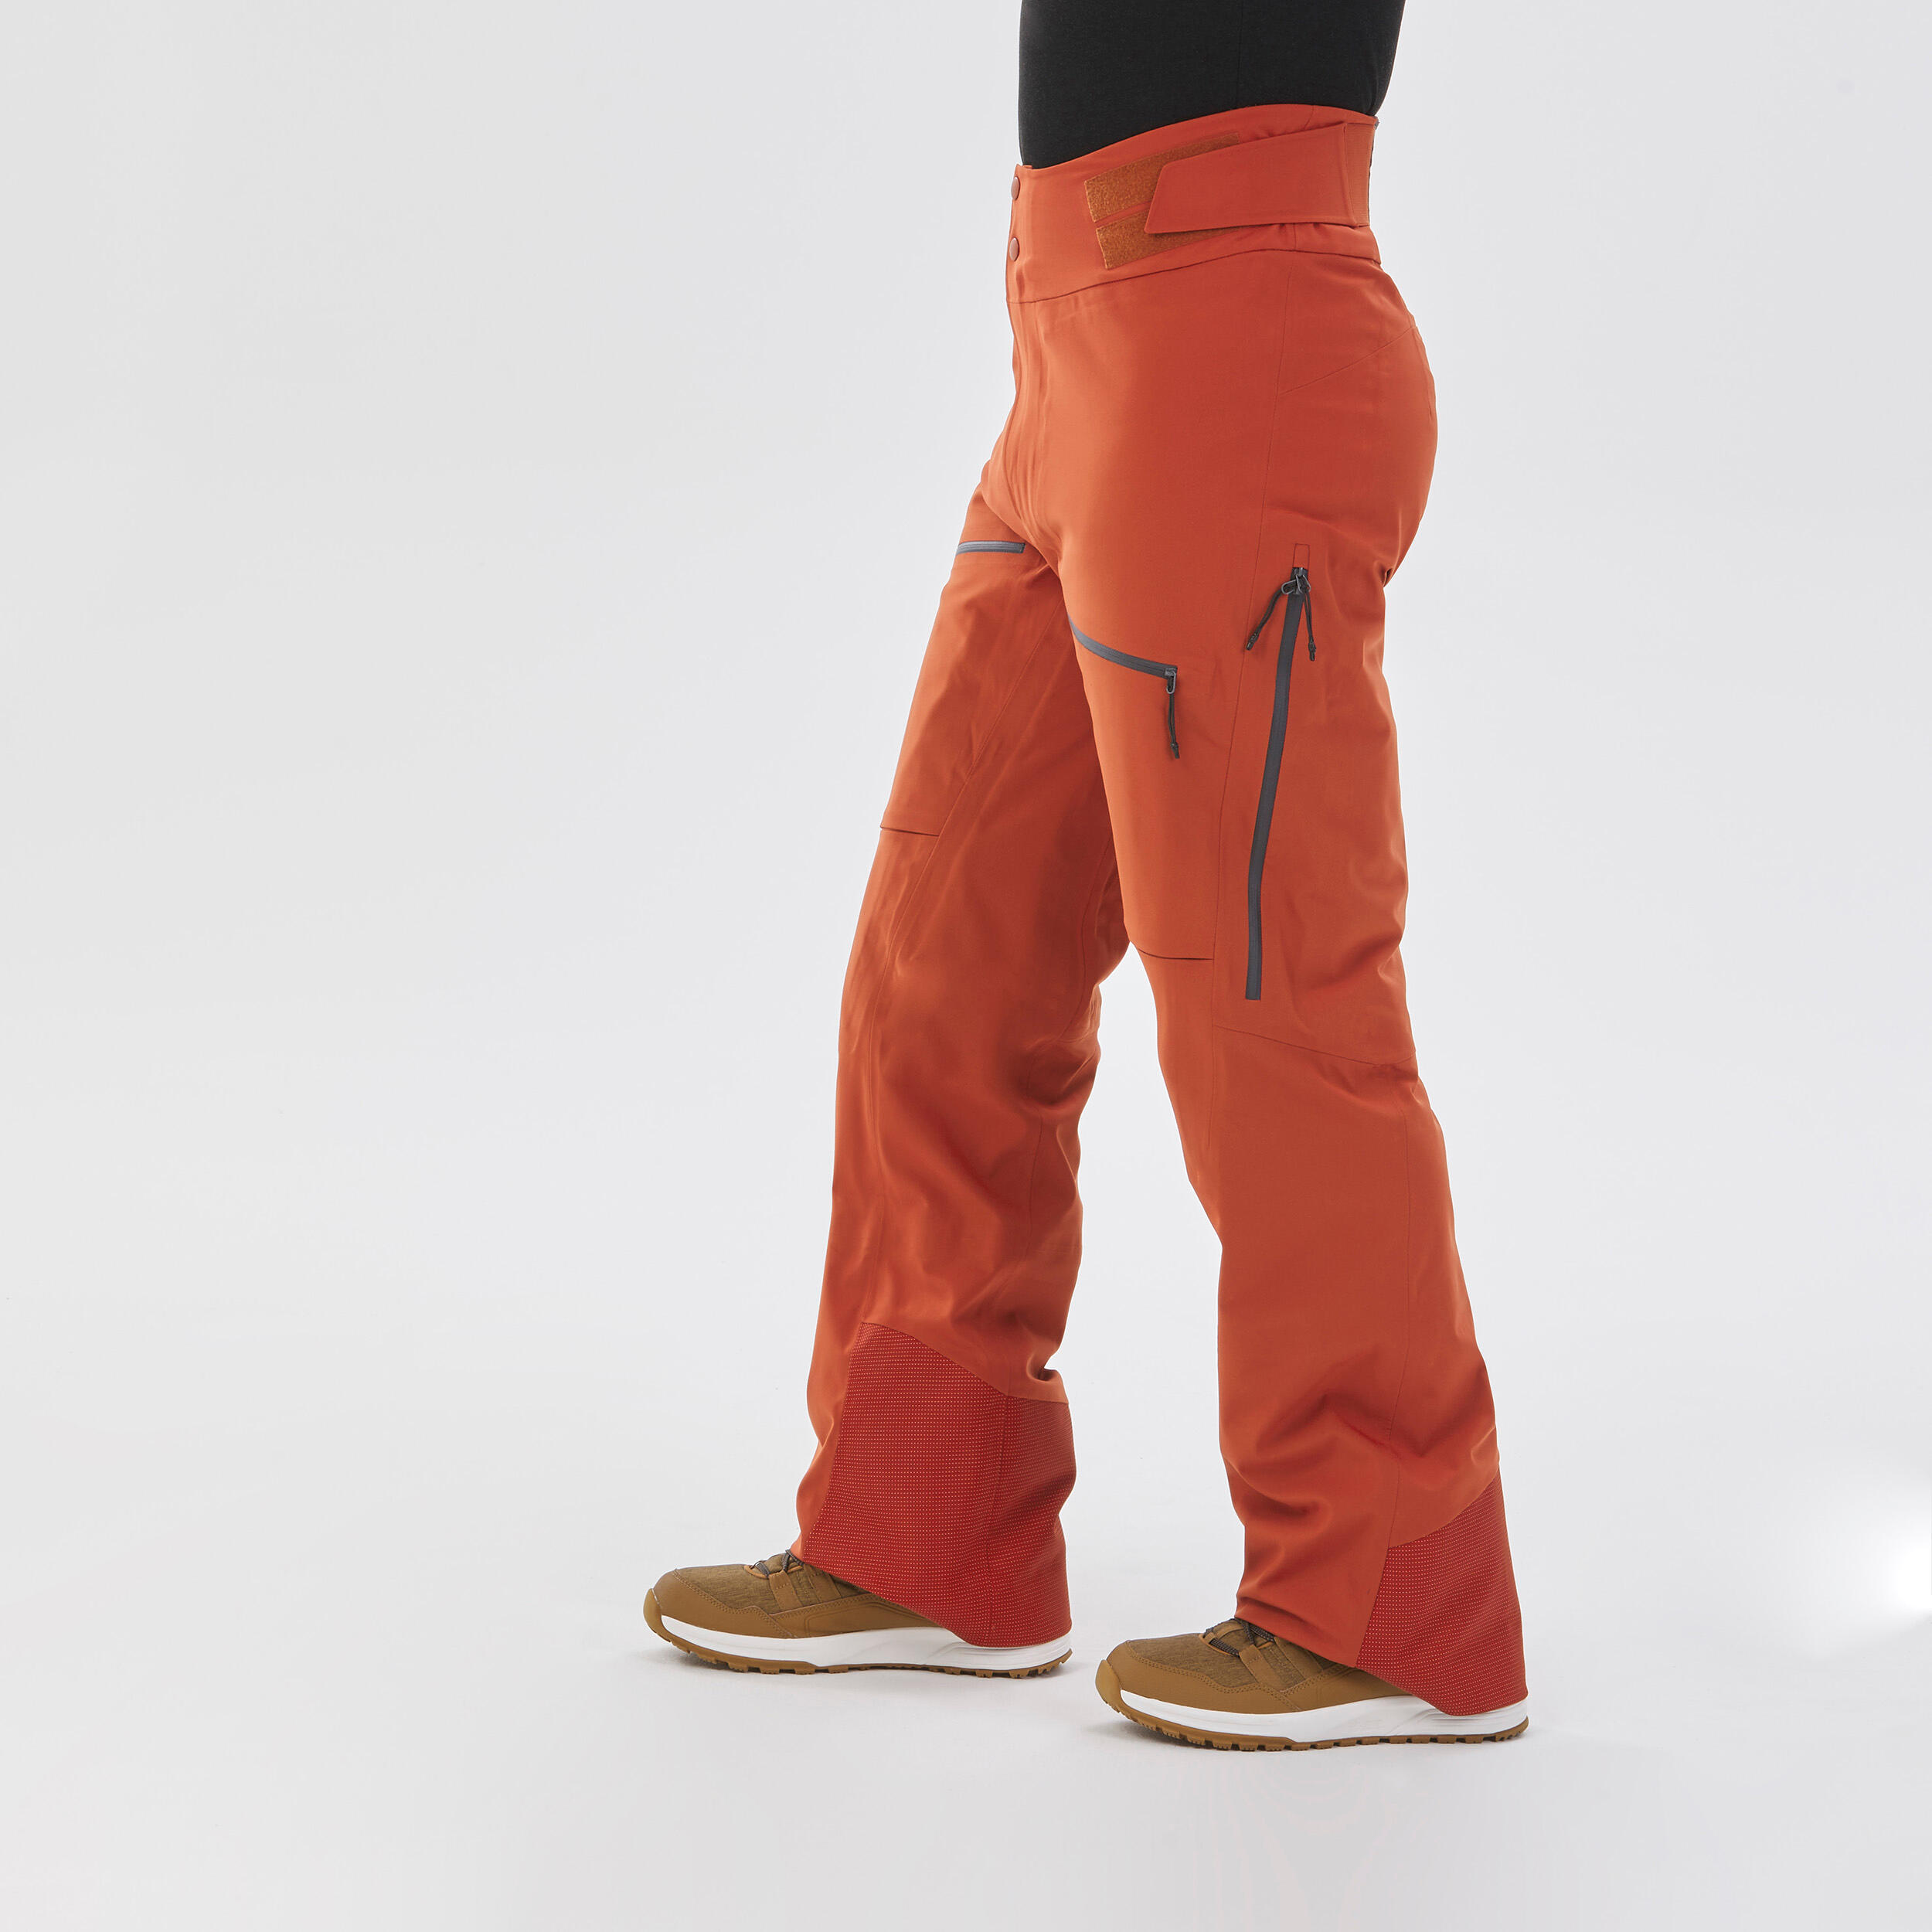 Men's Winter Pants - FR 500 Orange - Dark sepia - Wedze - Decathlon